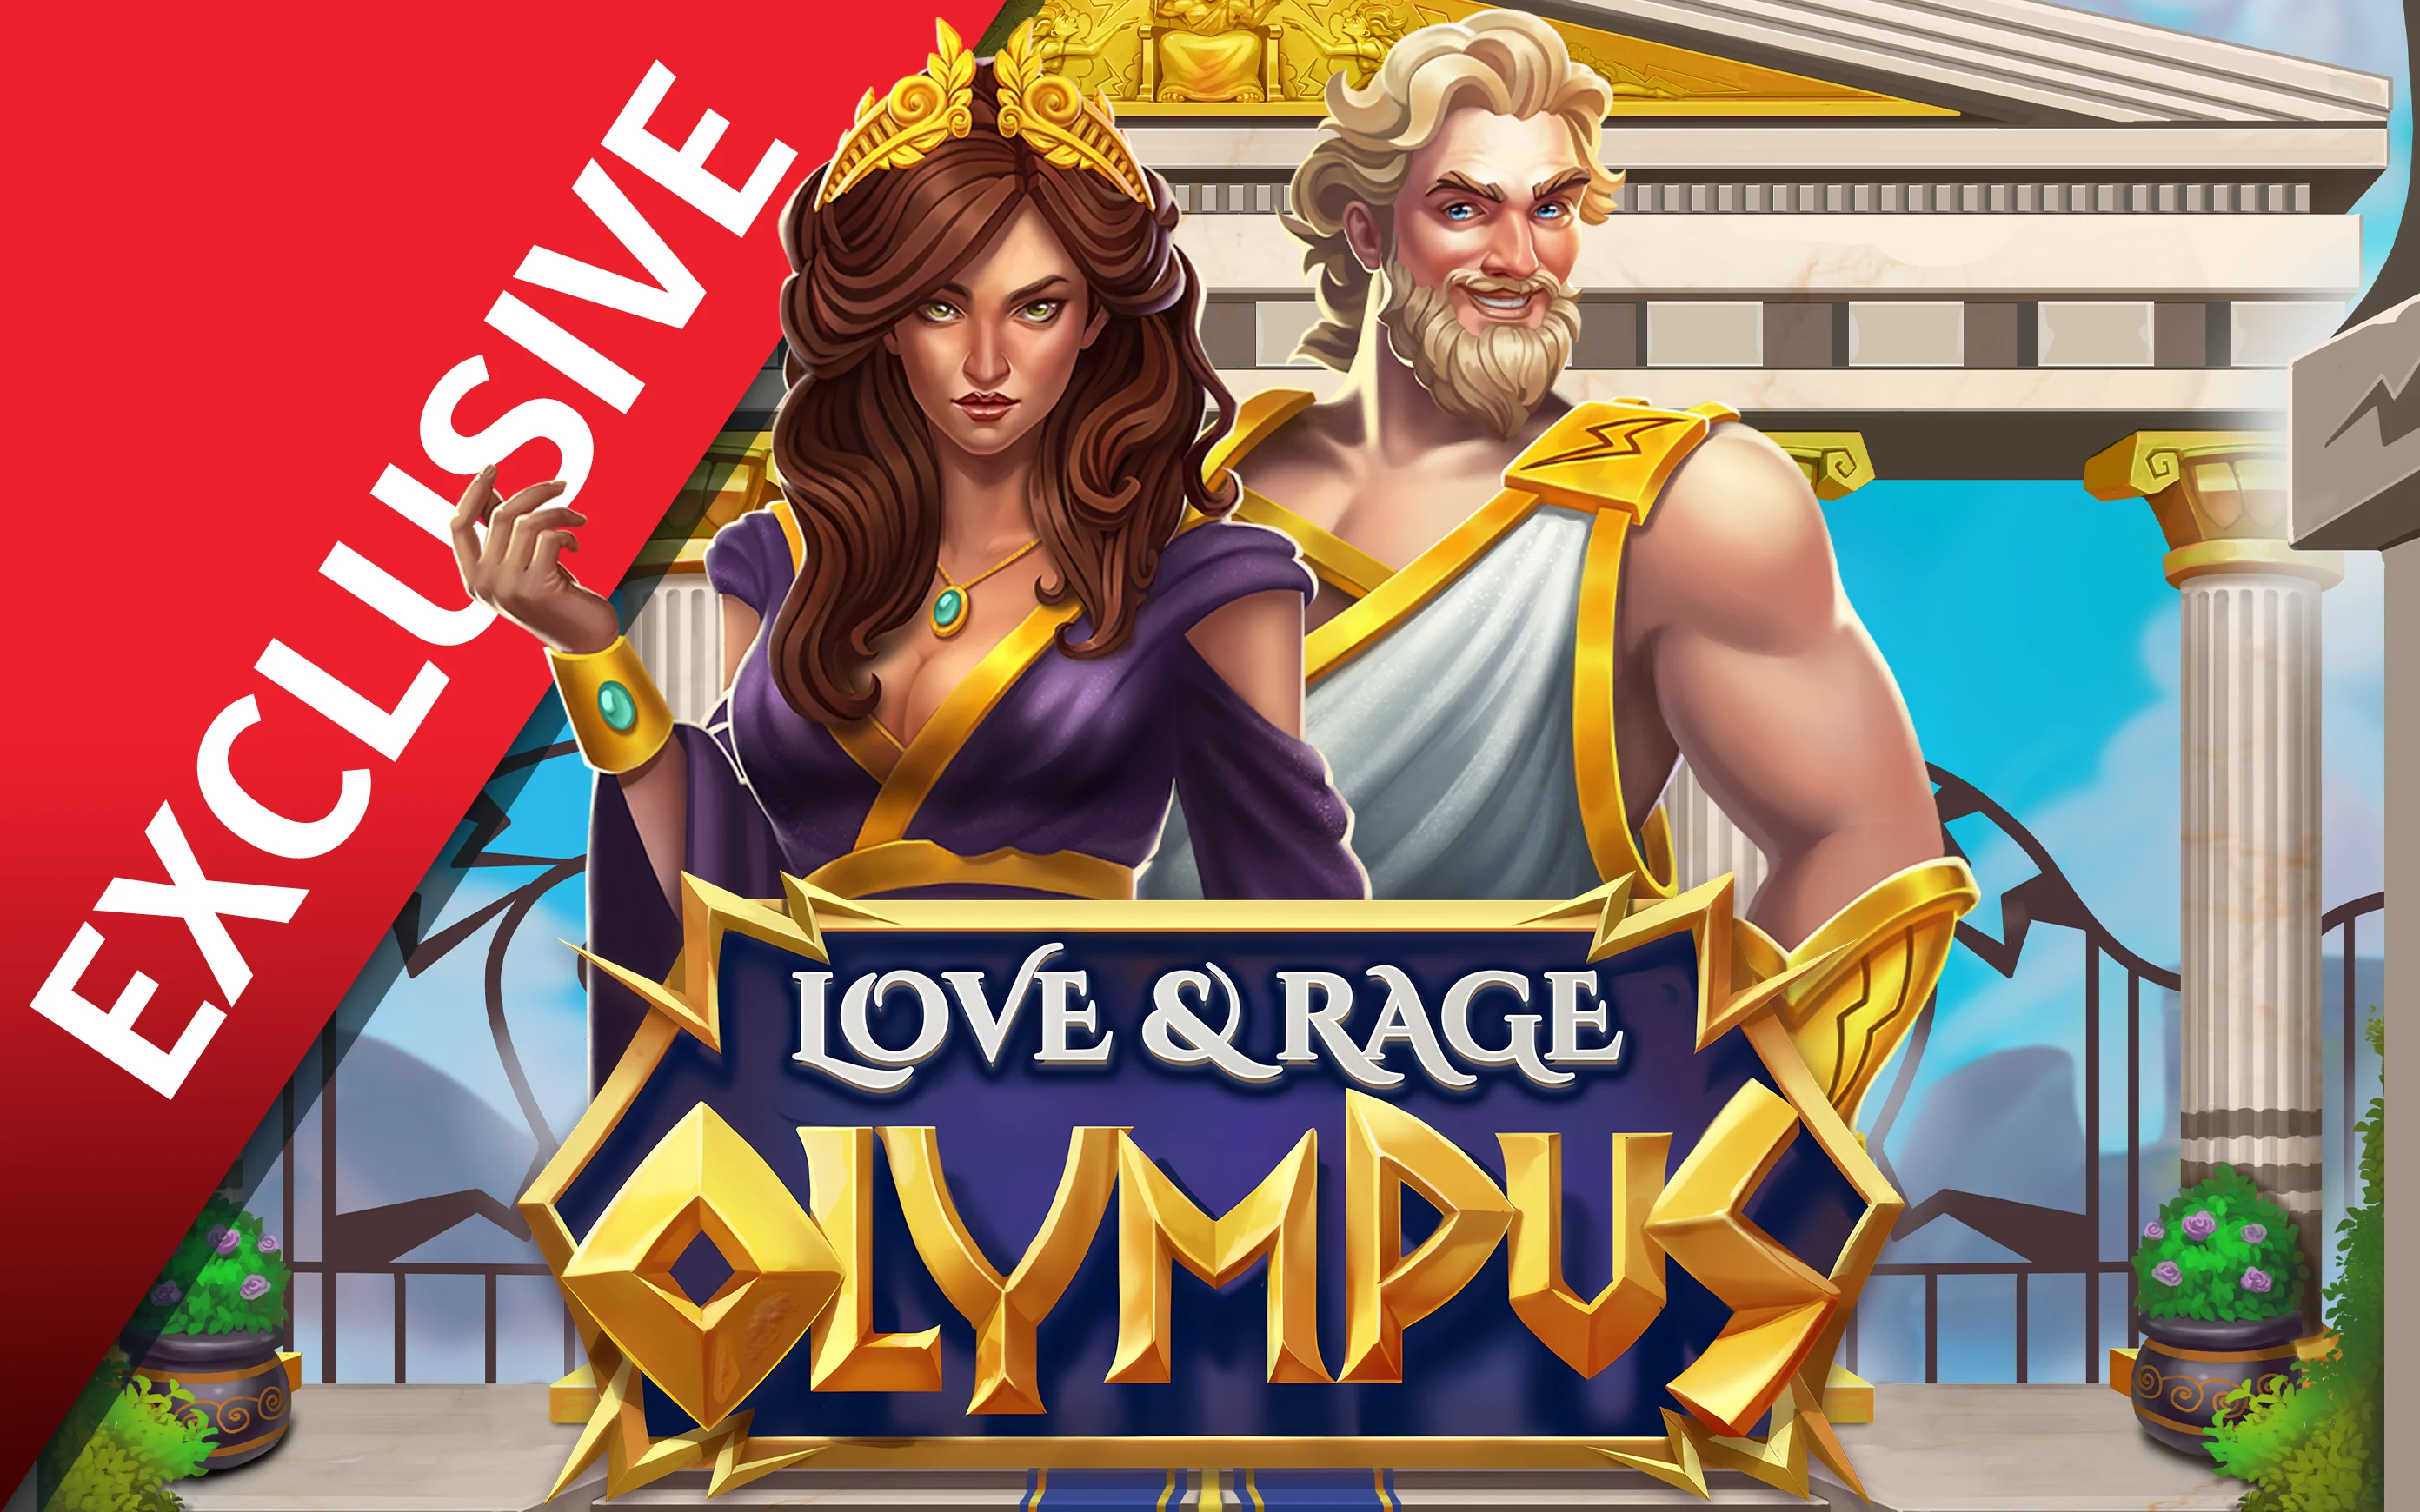 Starcasino.be online casino üzerinden Love and Rage – Olympus oynayın